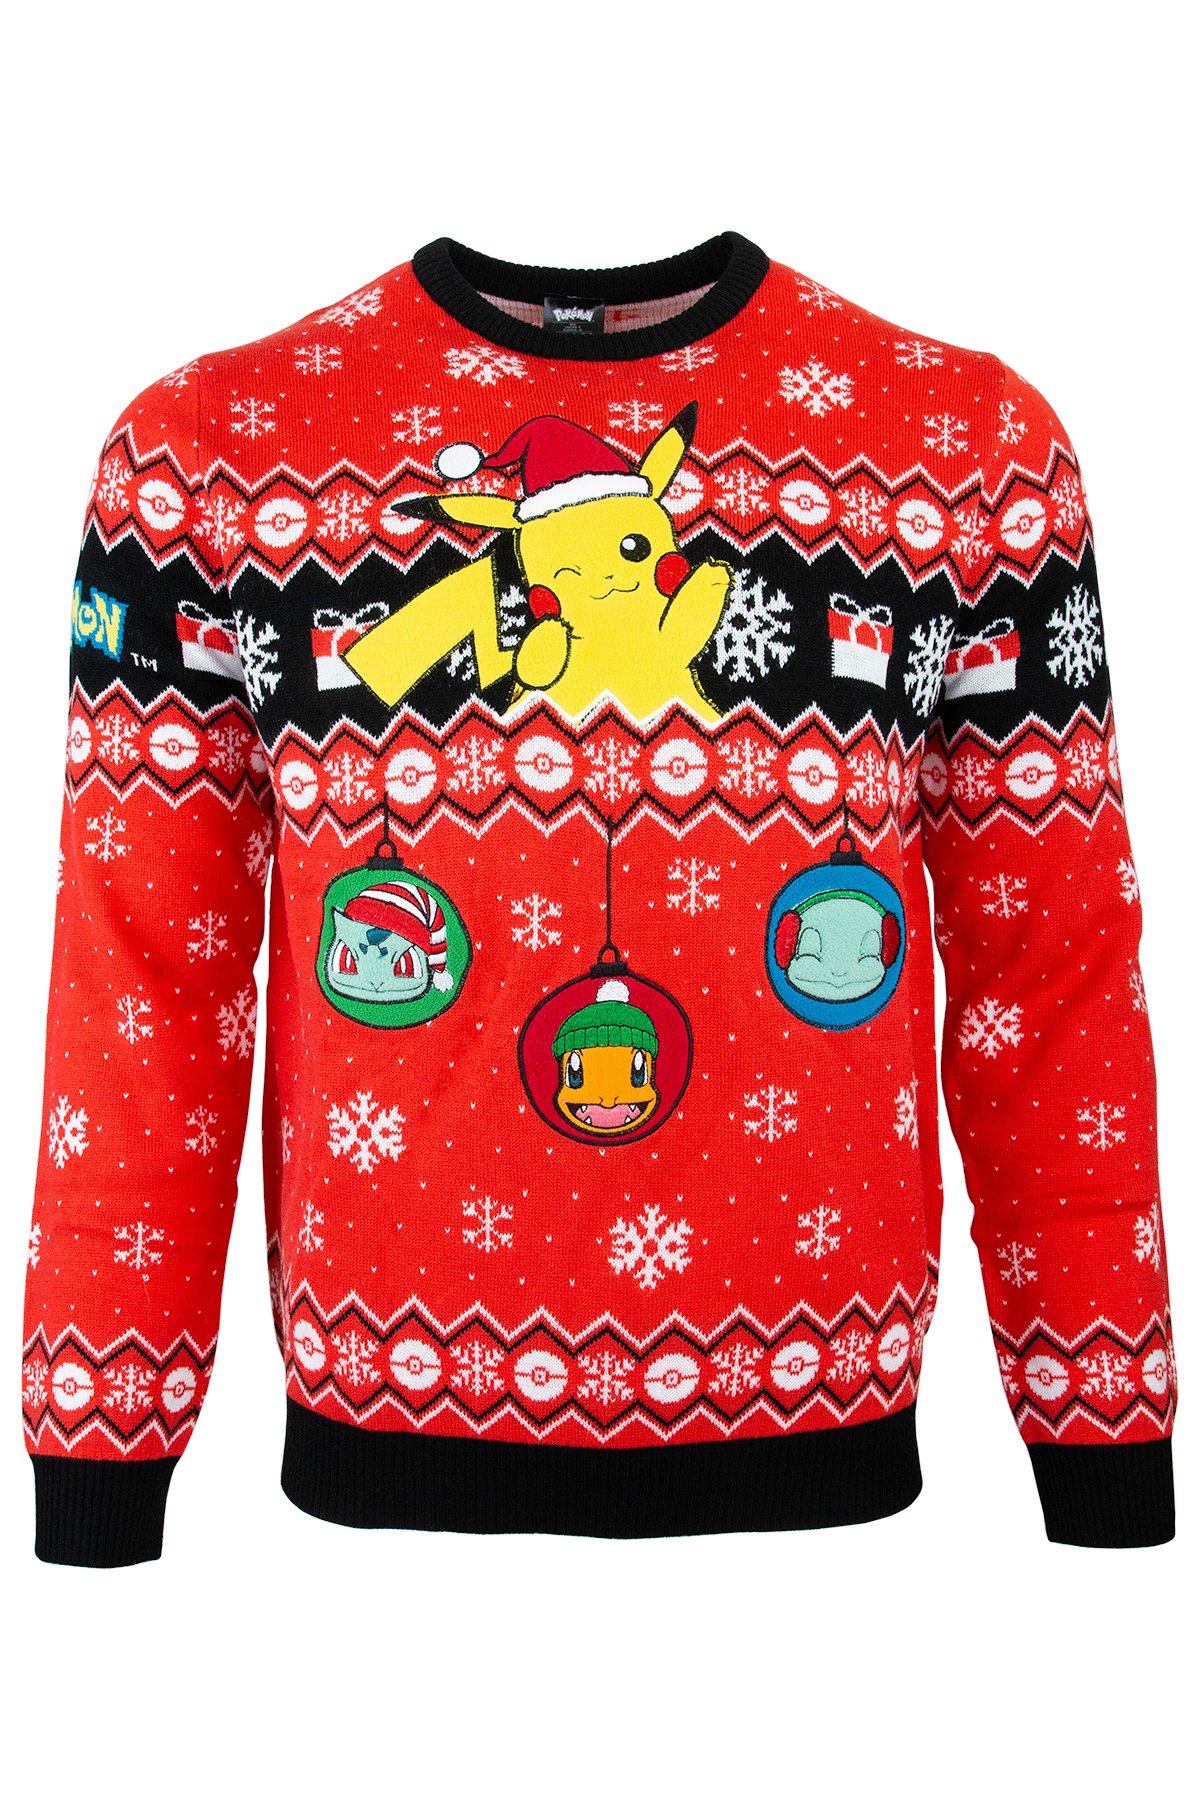 Pokemon pikachu christmas sweater and jumper